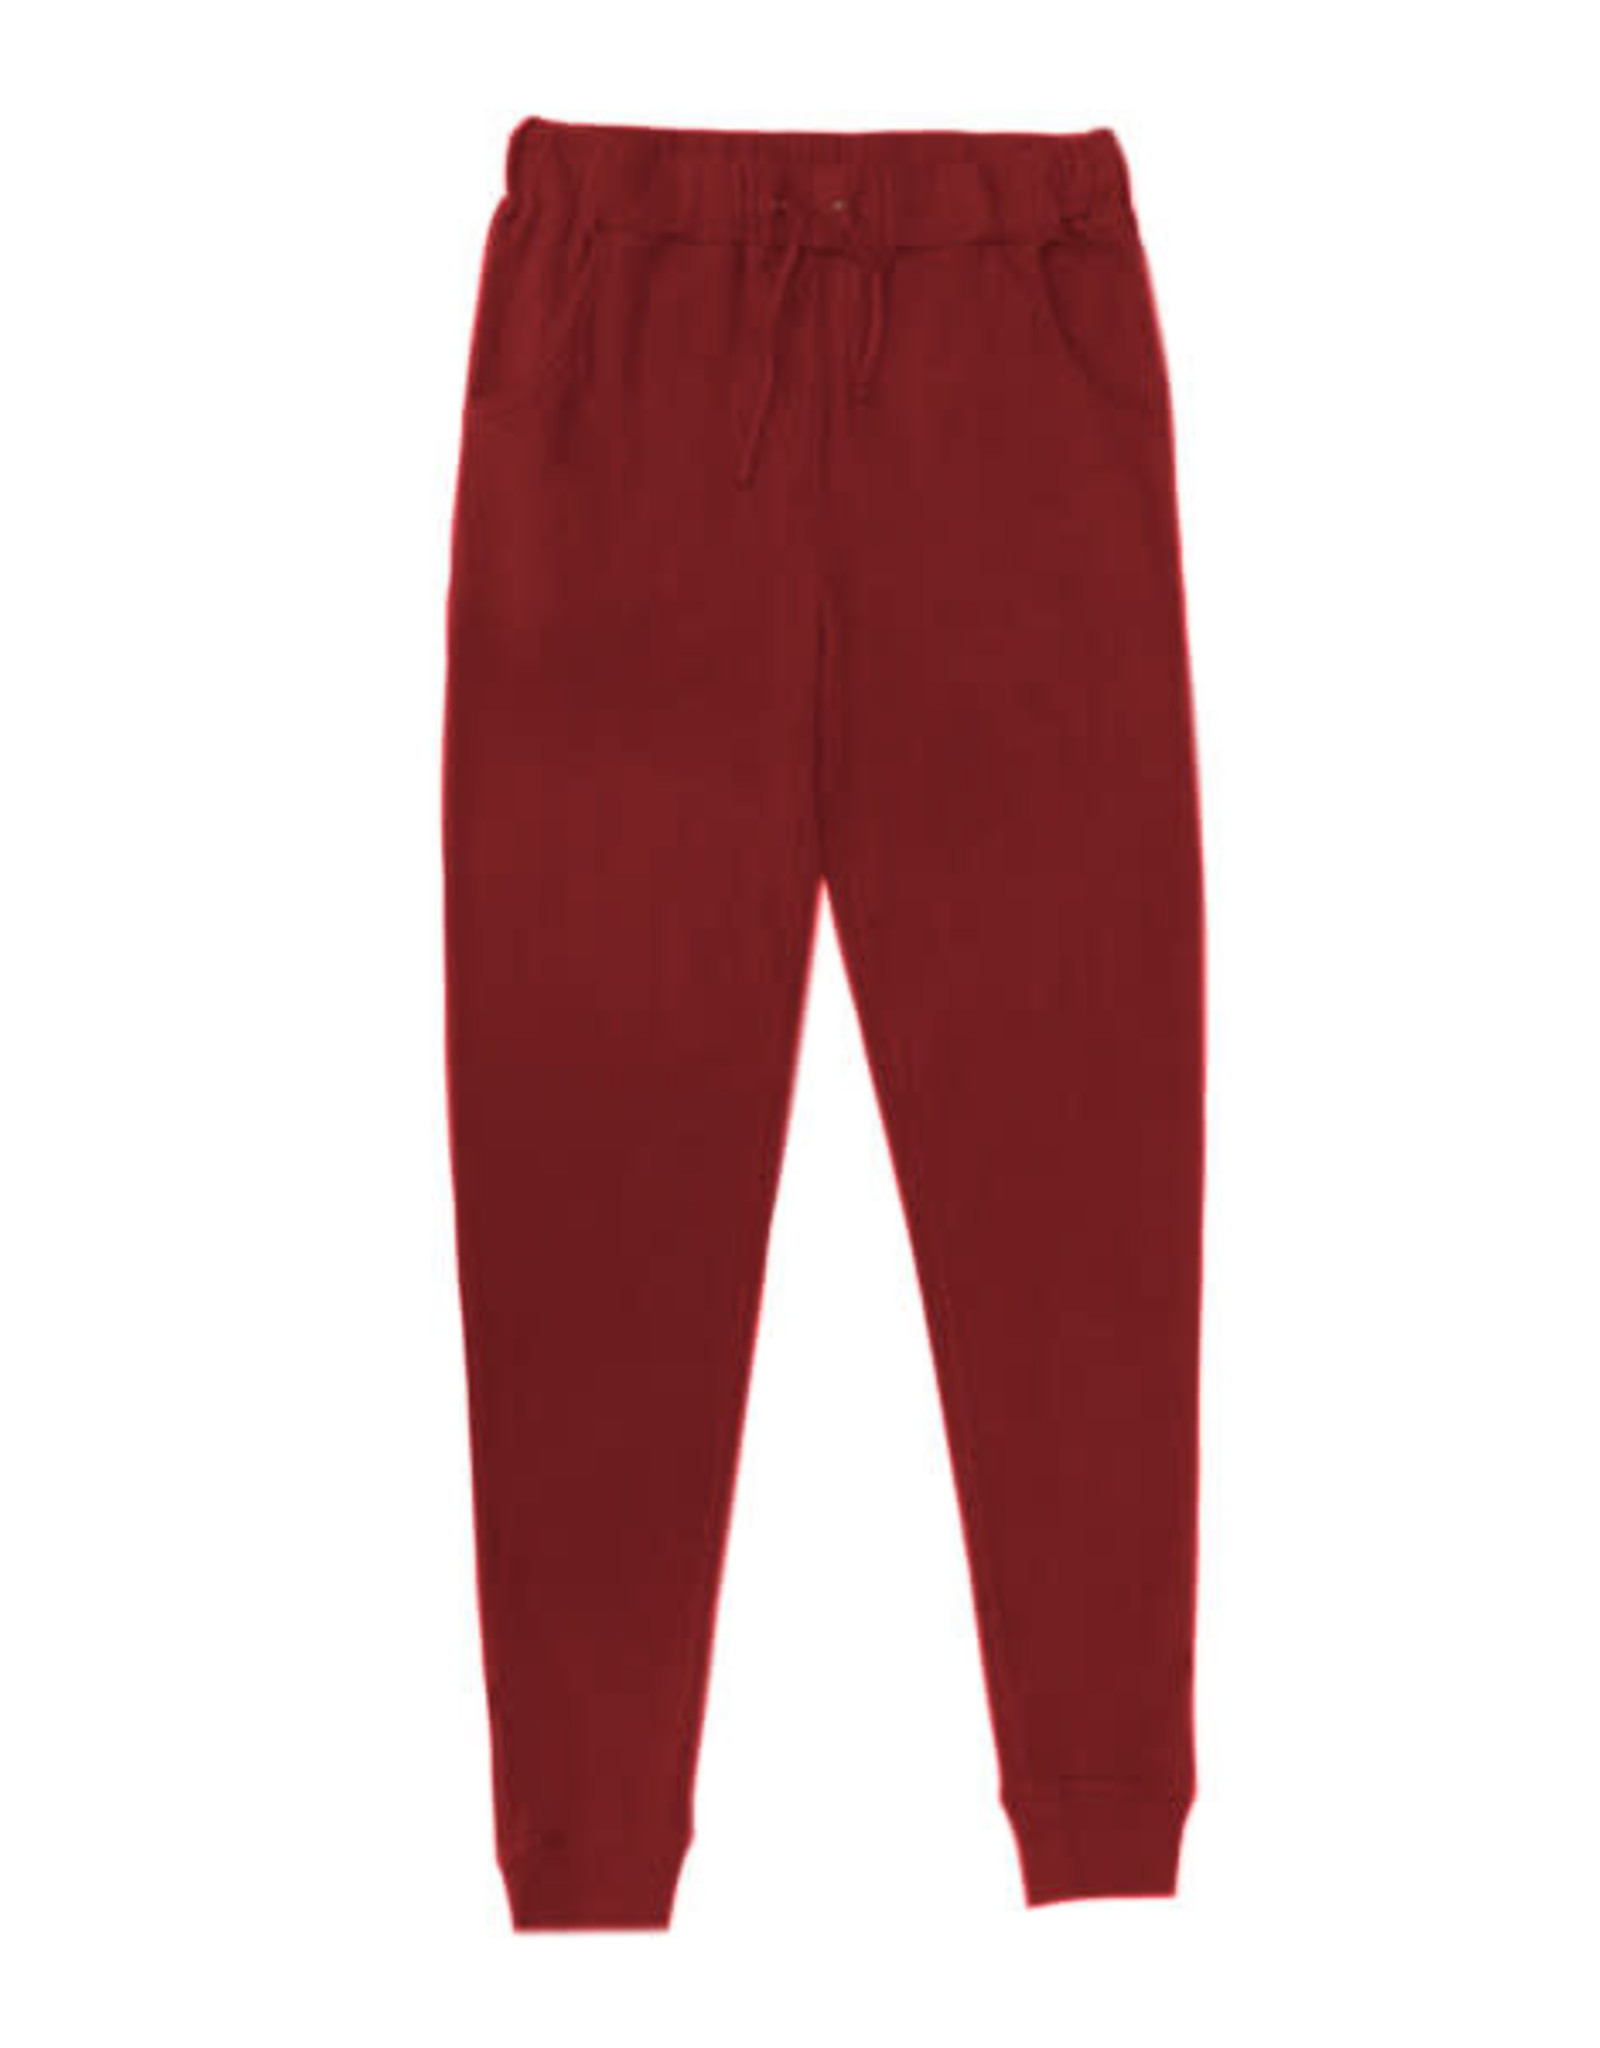 L'oved Baby Men's Thermal Pajama Set Crimson